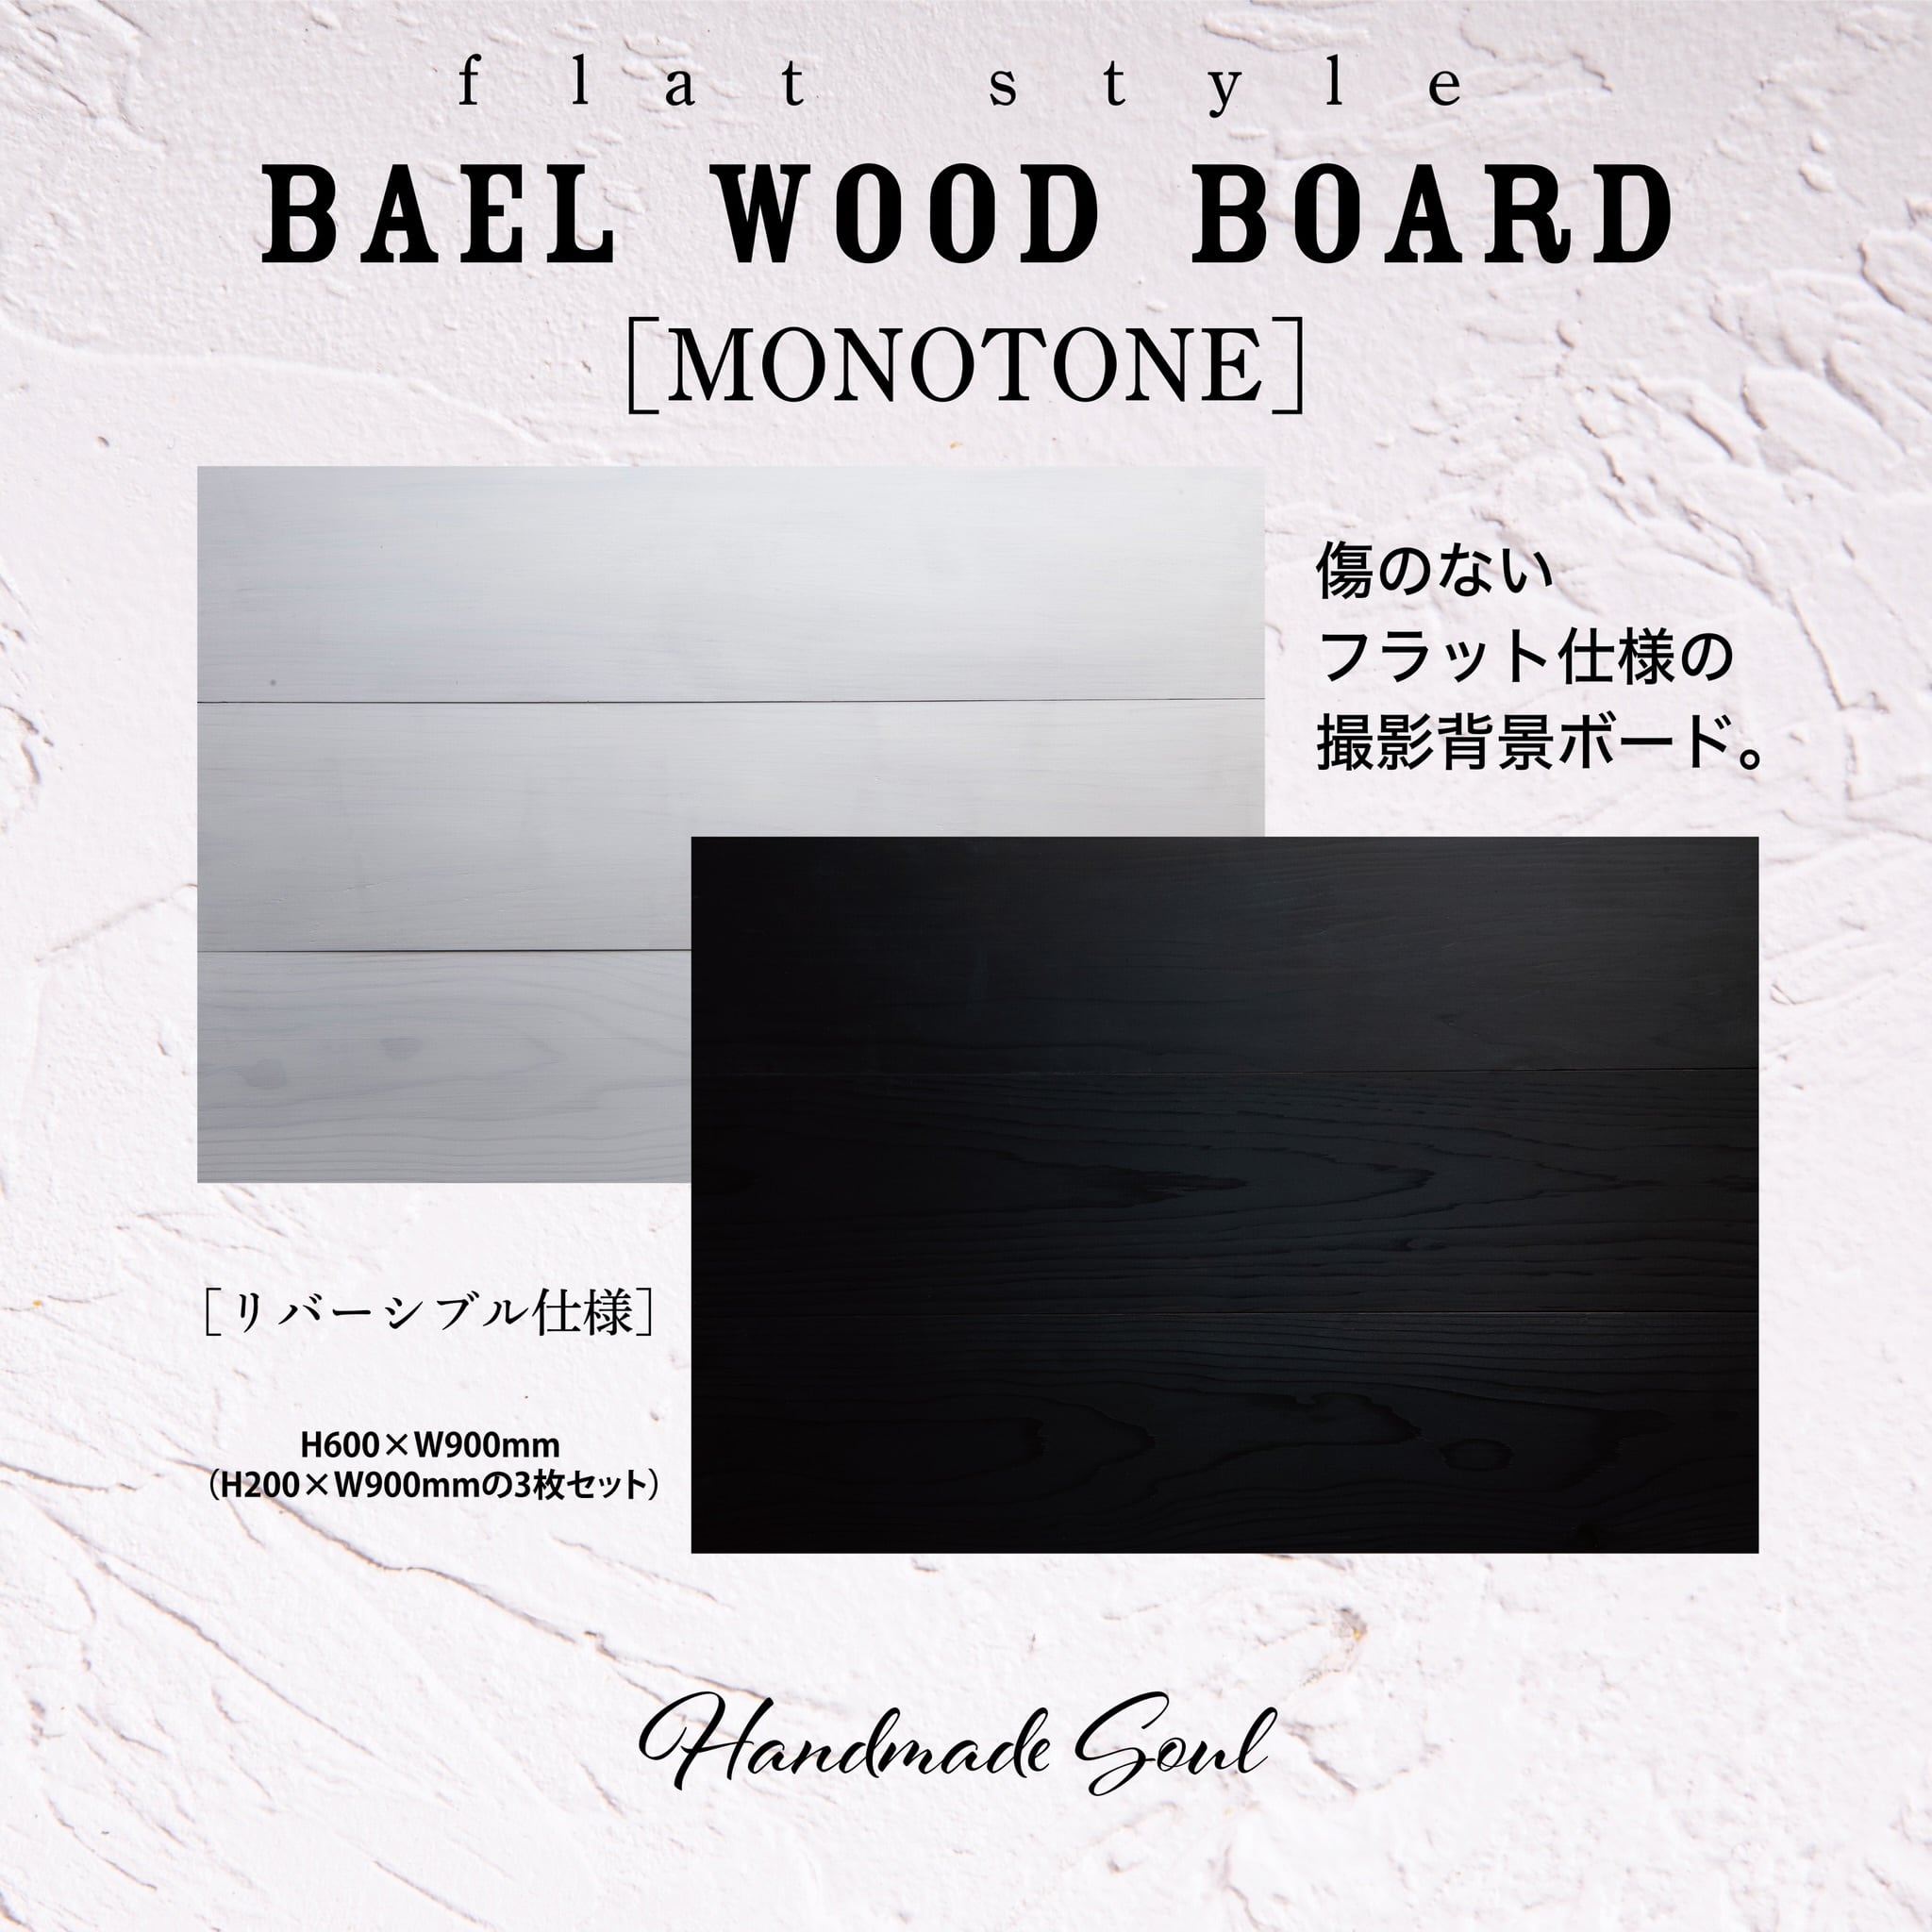 BAEL WOOD PHOTO BOARD〈ウッドフラットフォトボード〉【モノトーン】